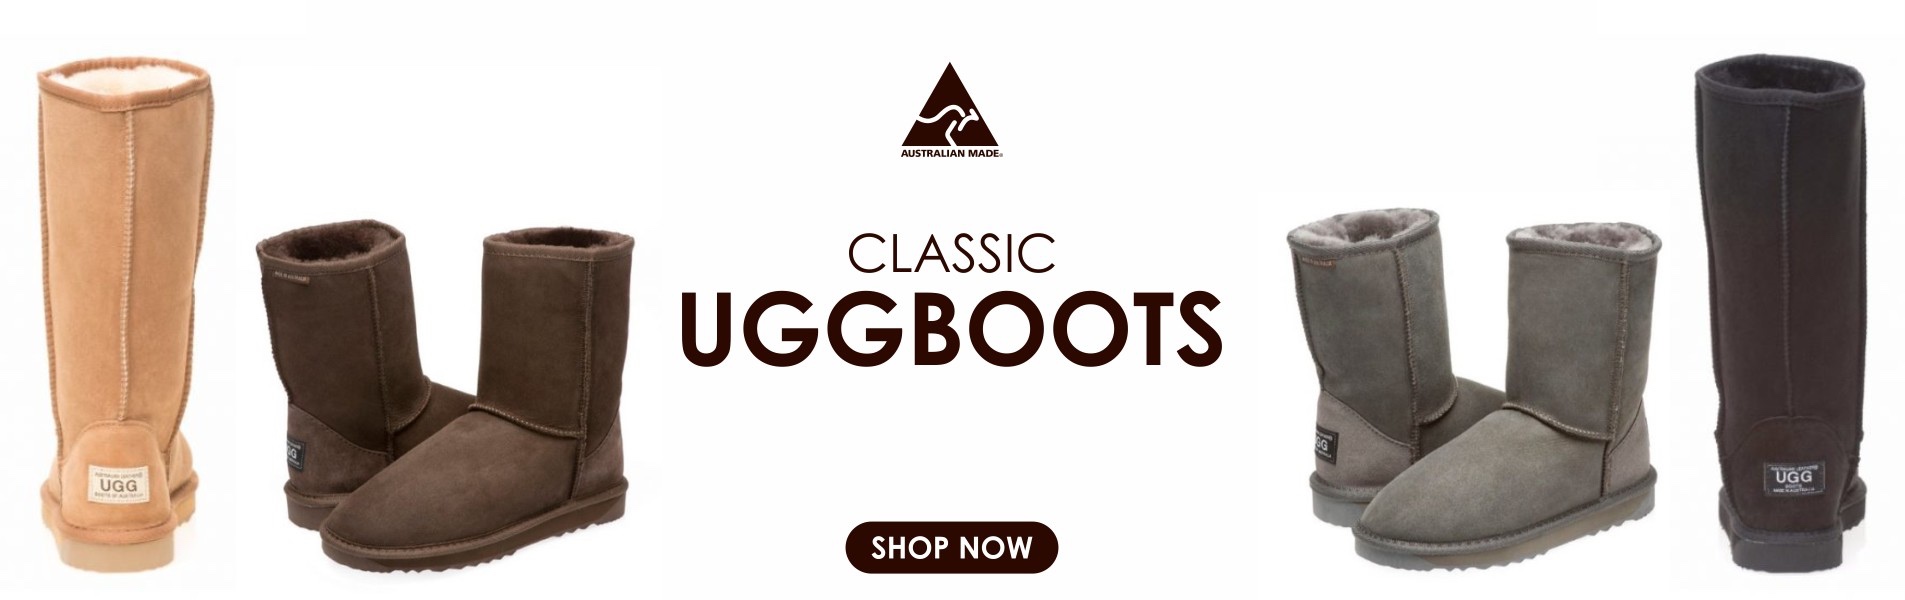 ugg boots company name